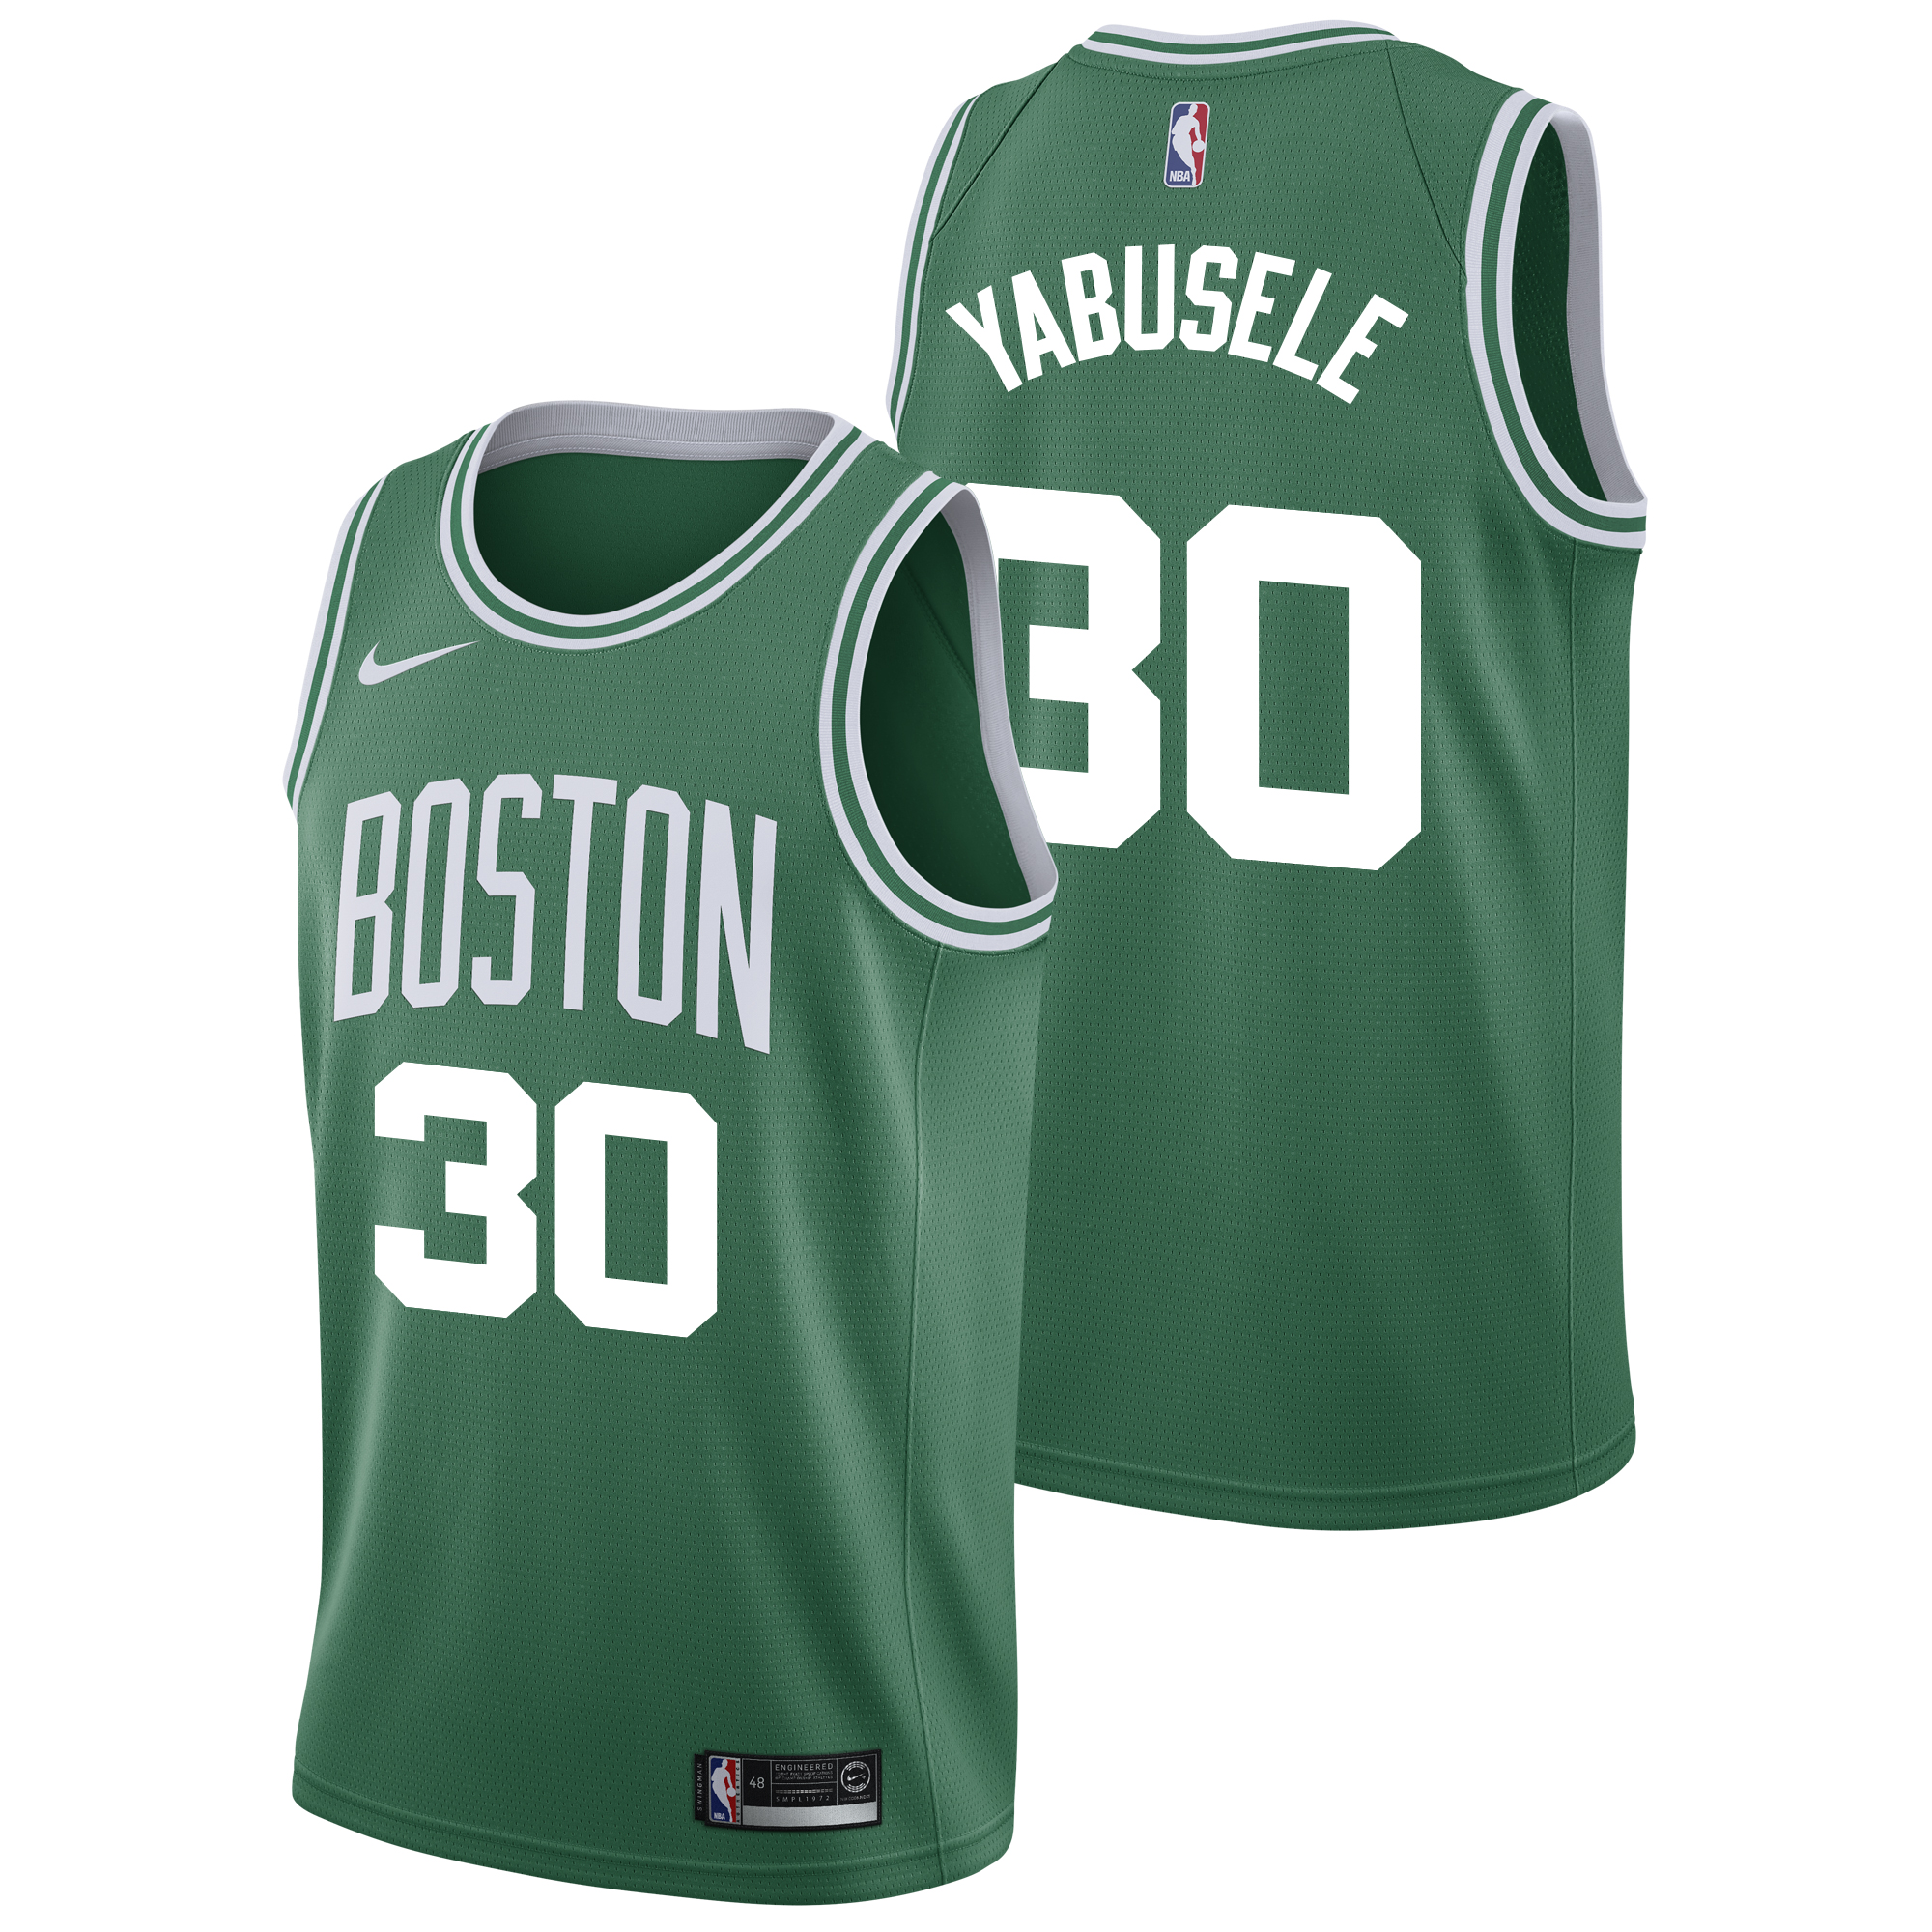 "Boston Celtics Nike Icon Swingman Jersey - Guerschon Yabusele - Mens"